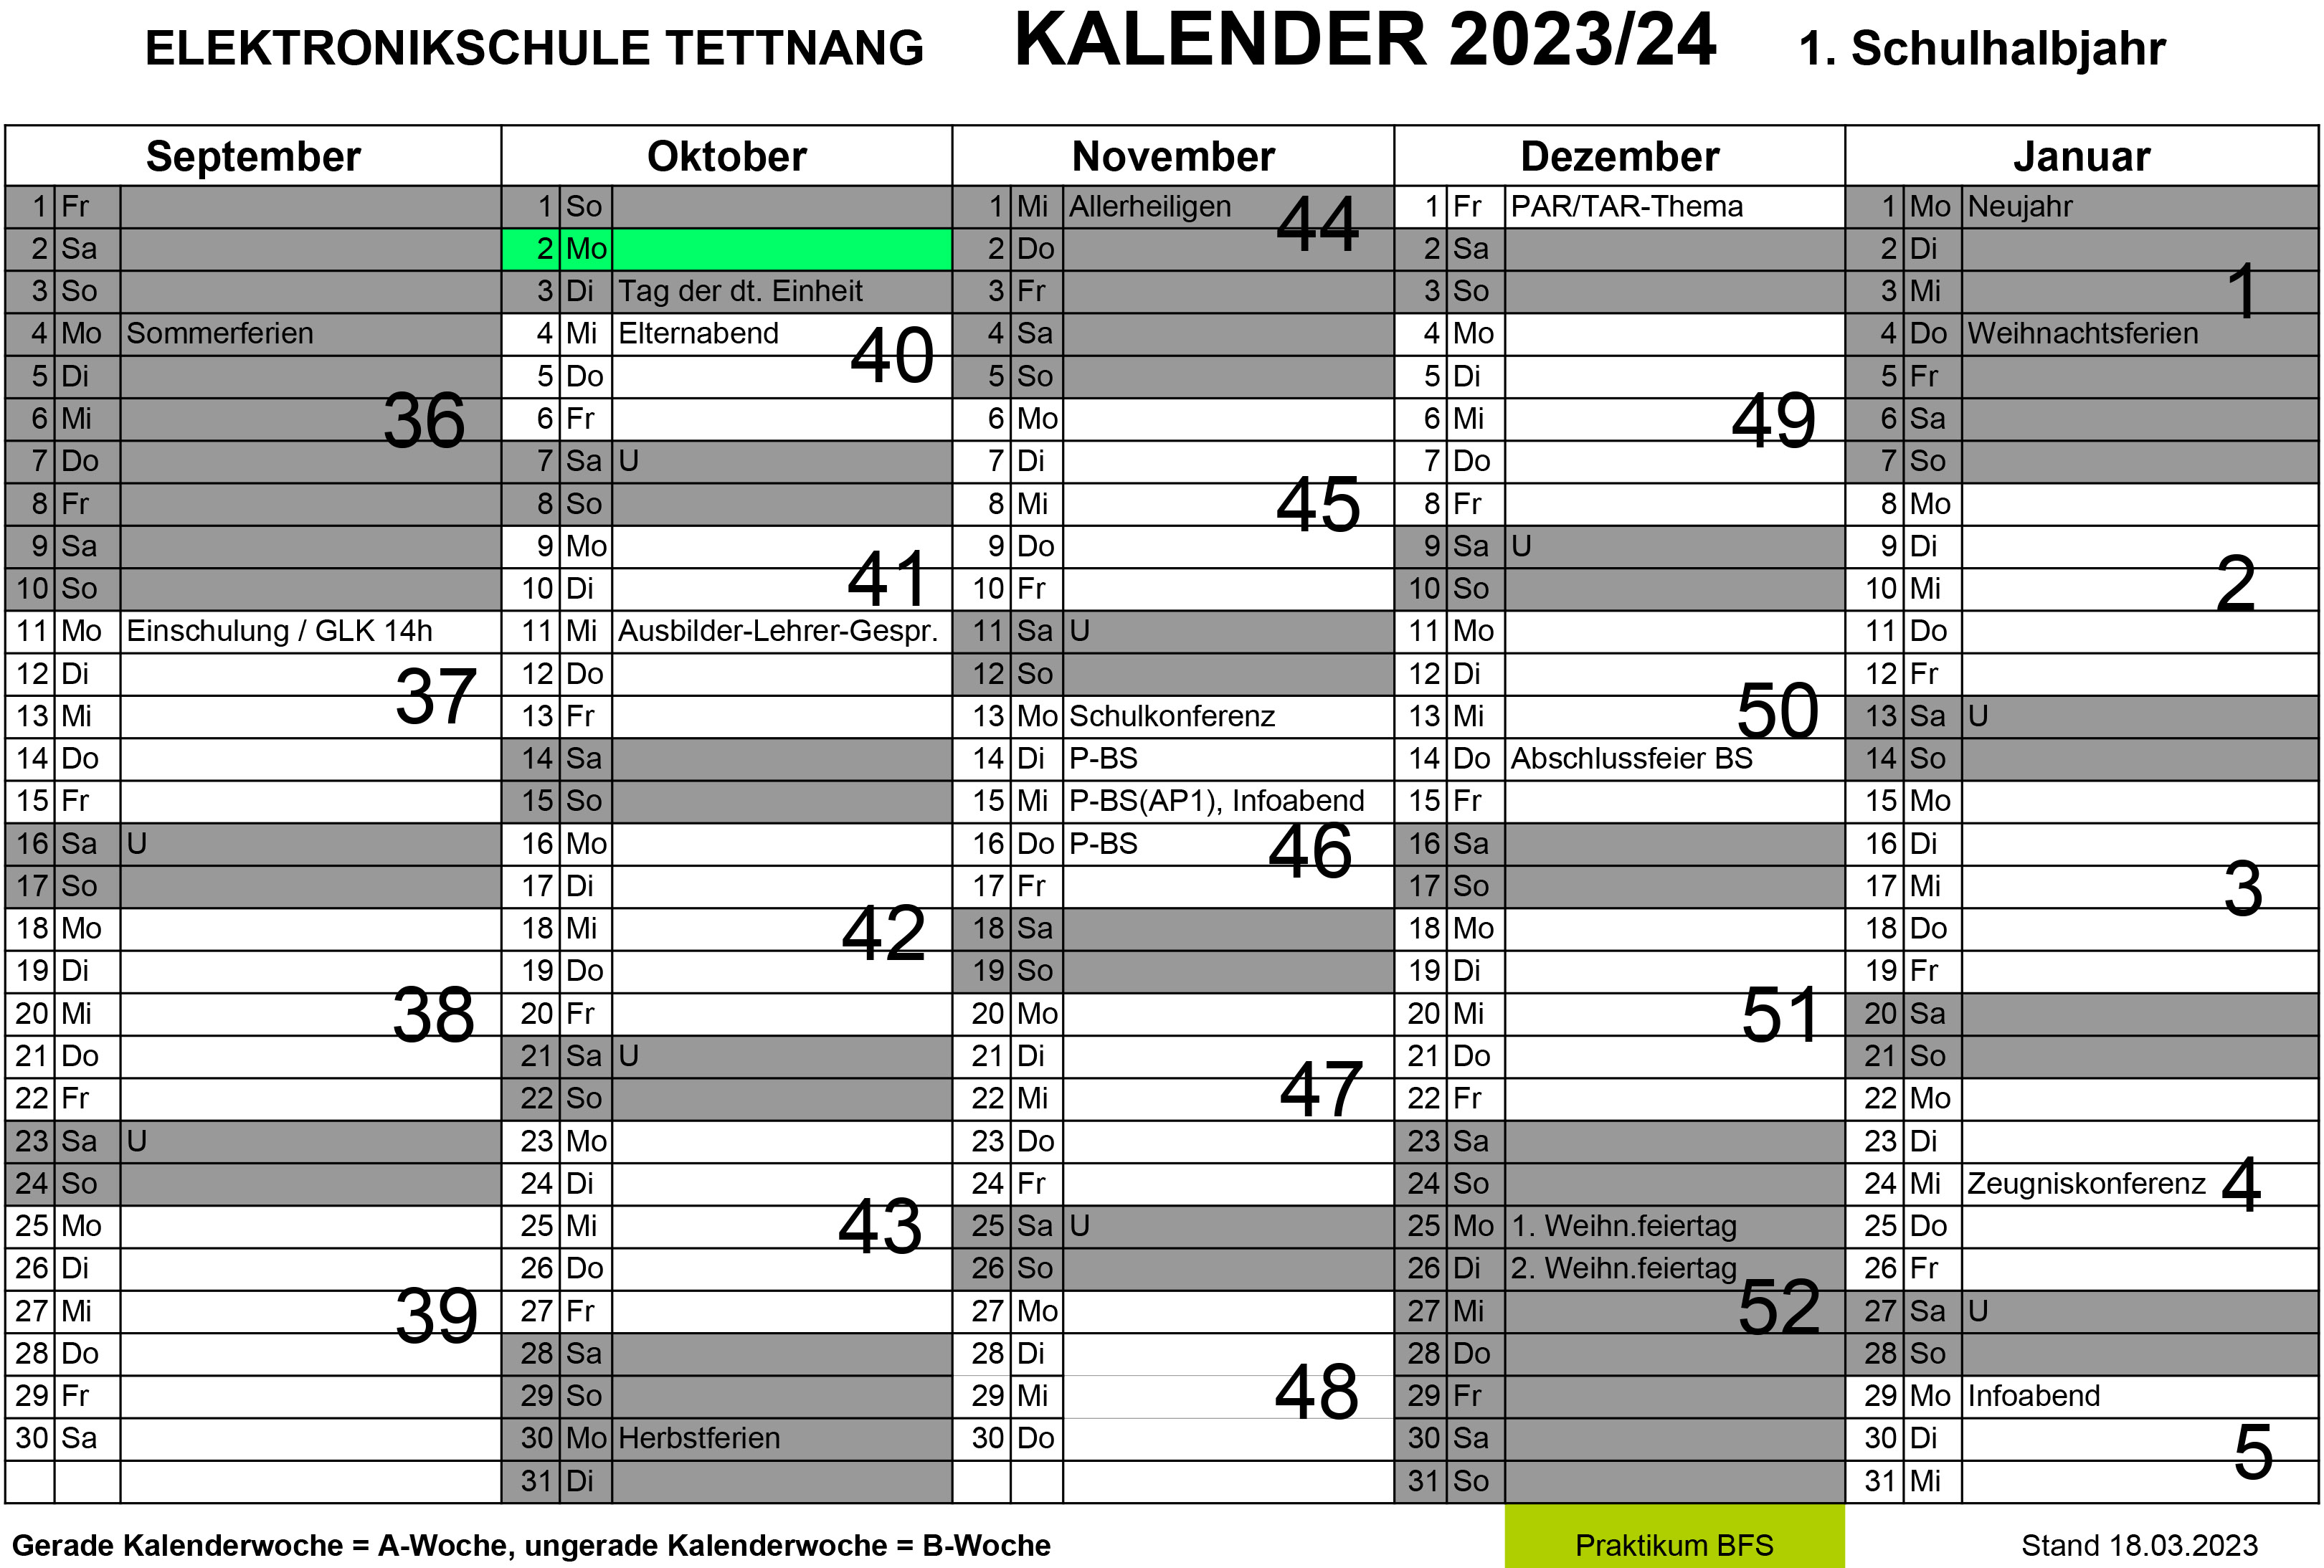 EST KALENDER 2023 24 230517